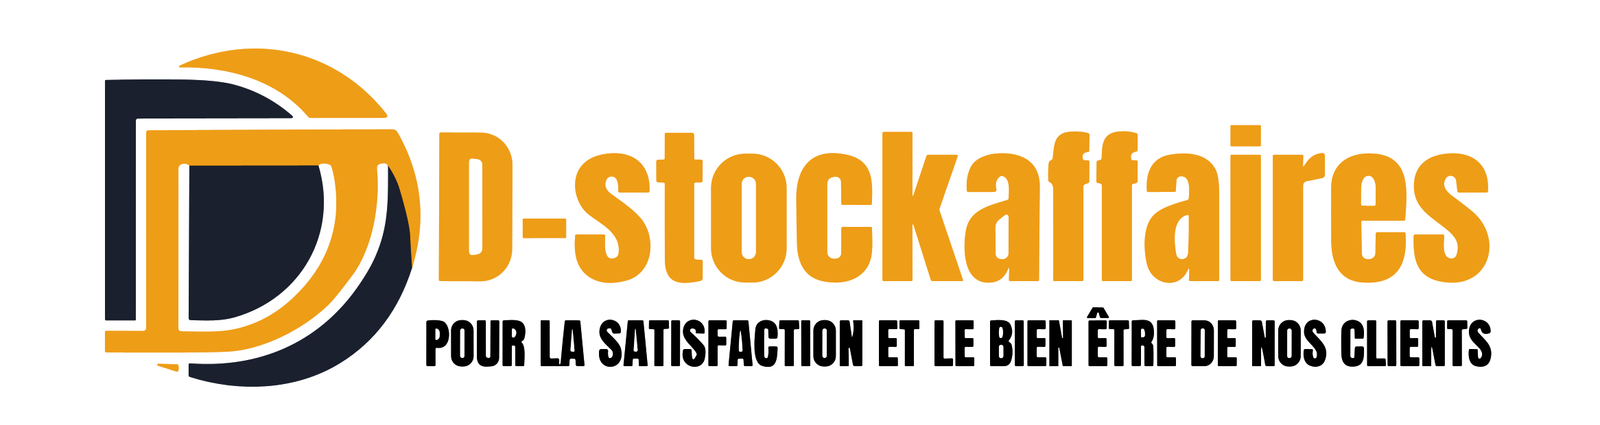 dstockaffaires.com